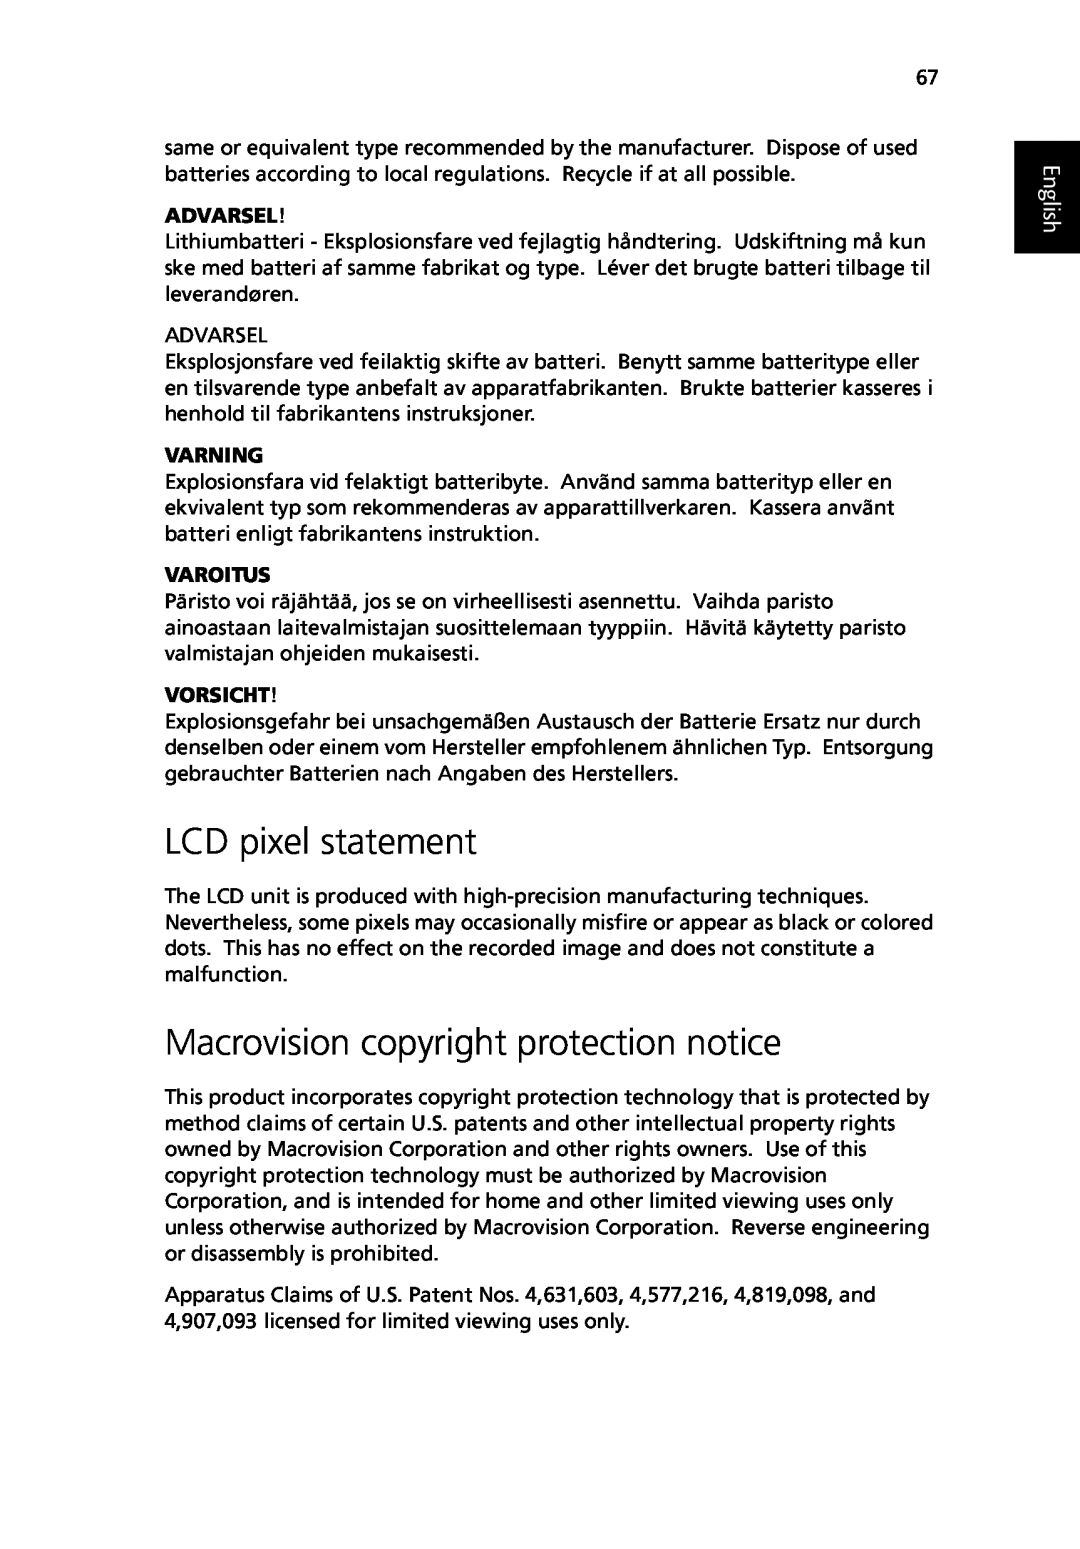 Acer TravelMate 530 LCD pixel statement, Macrovision copyright protection notice, English, Advarsel, Varning, Varoitus 